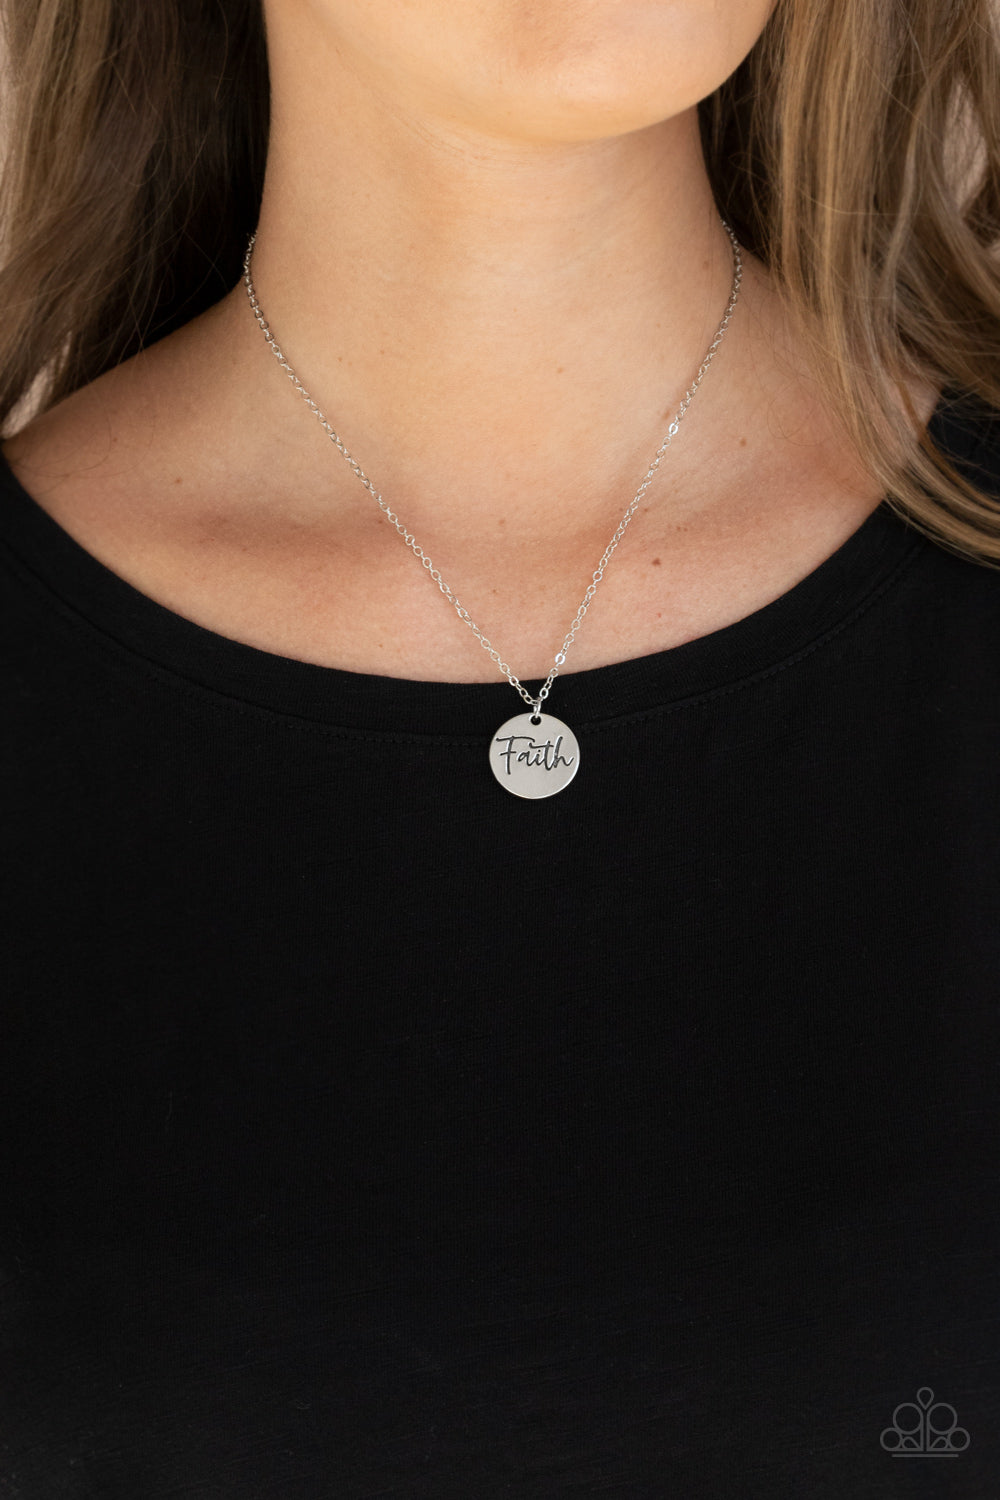 Choose Faith - Silver inspirational necklace